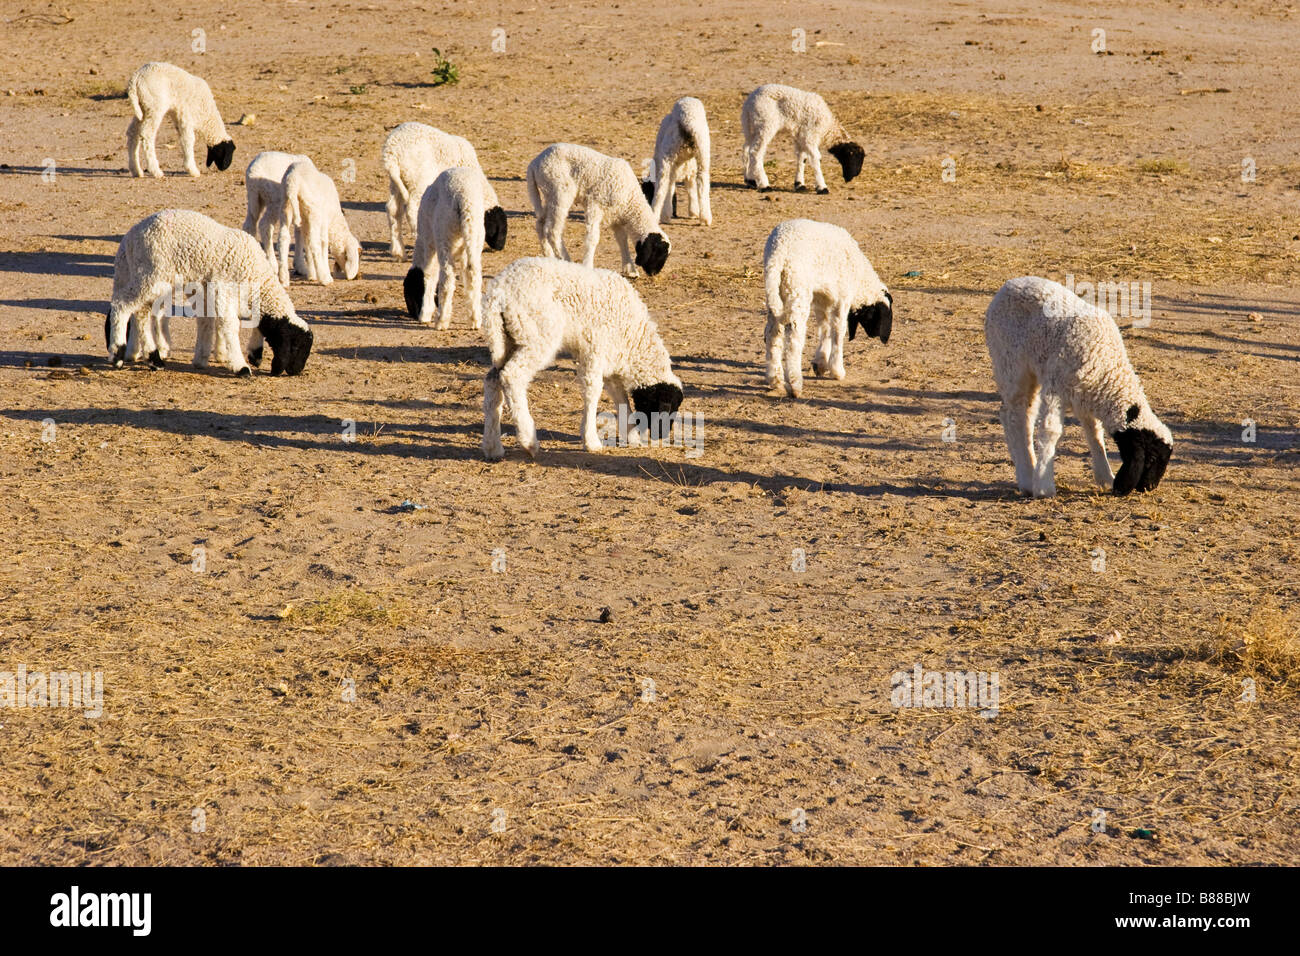 goats in desert Khuri Rajasthan India Stock Photo